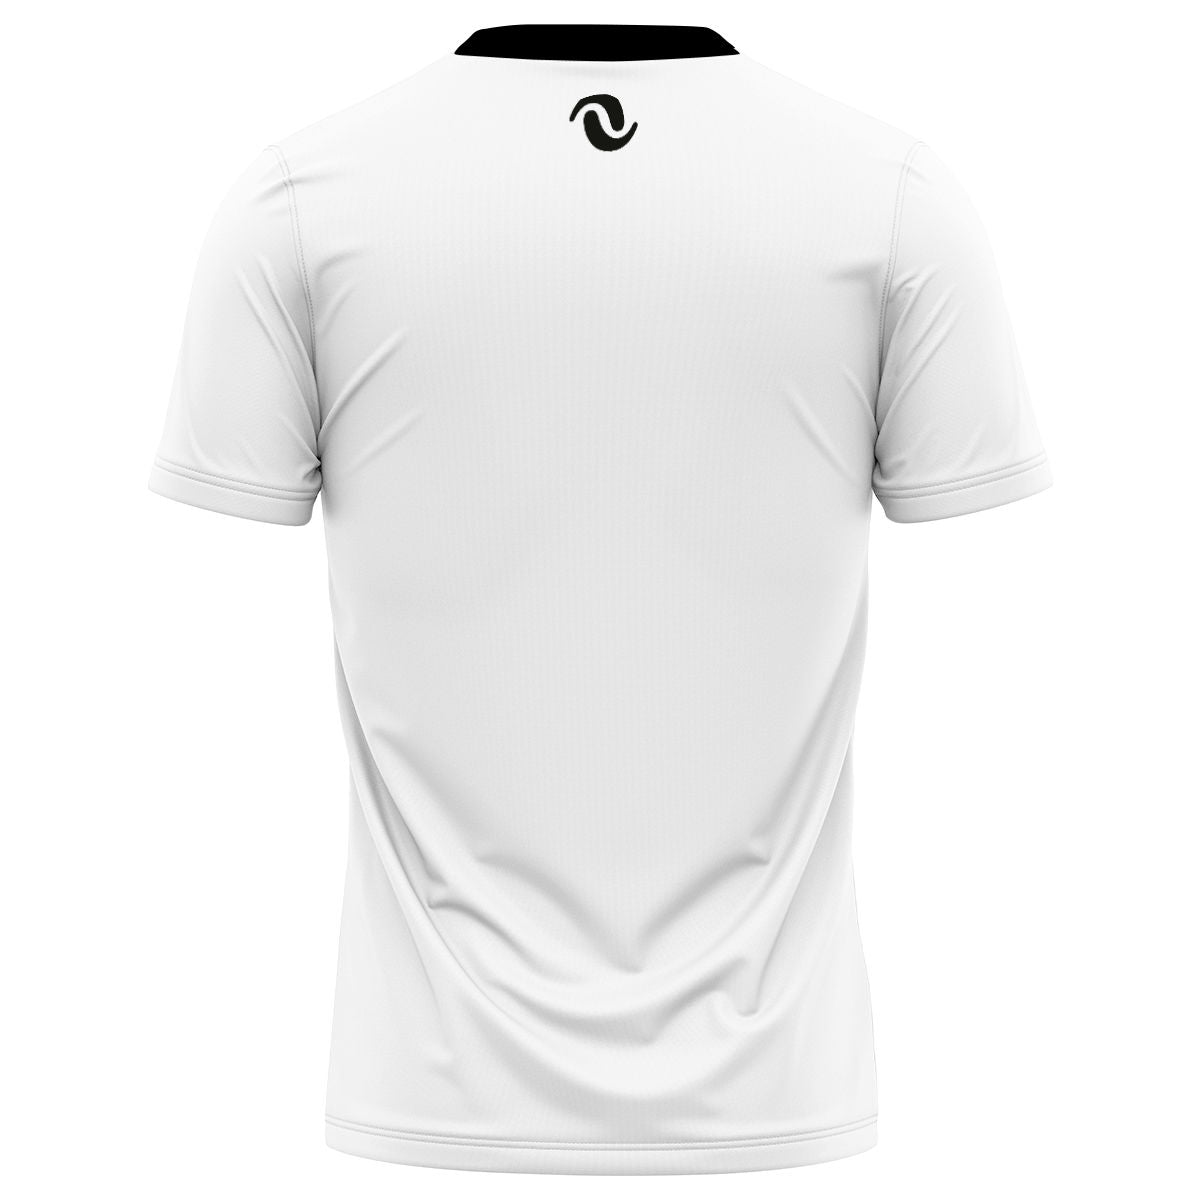 NV Querétaro - Performance Shirt